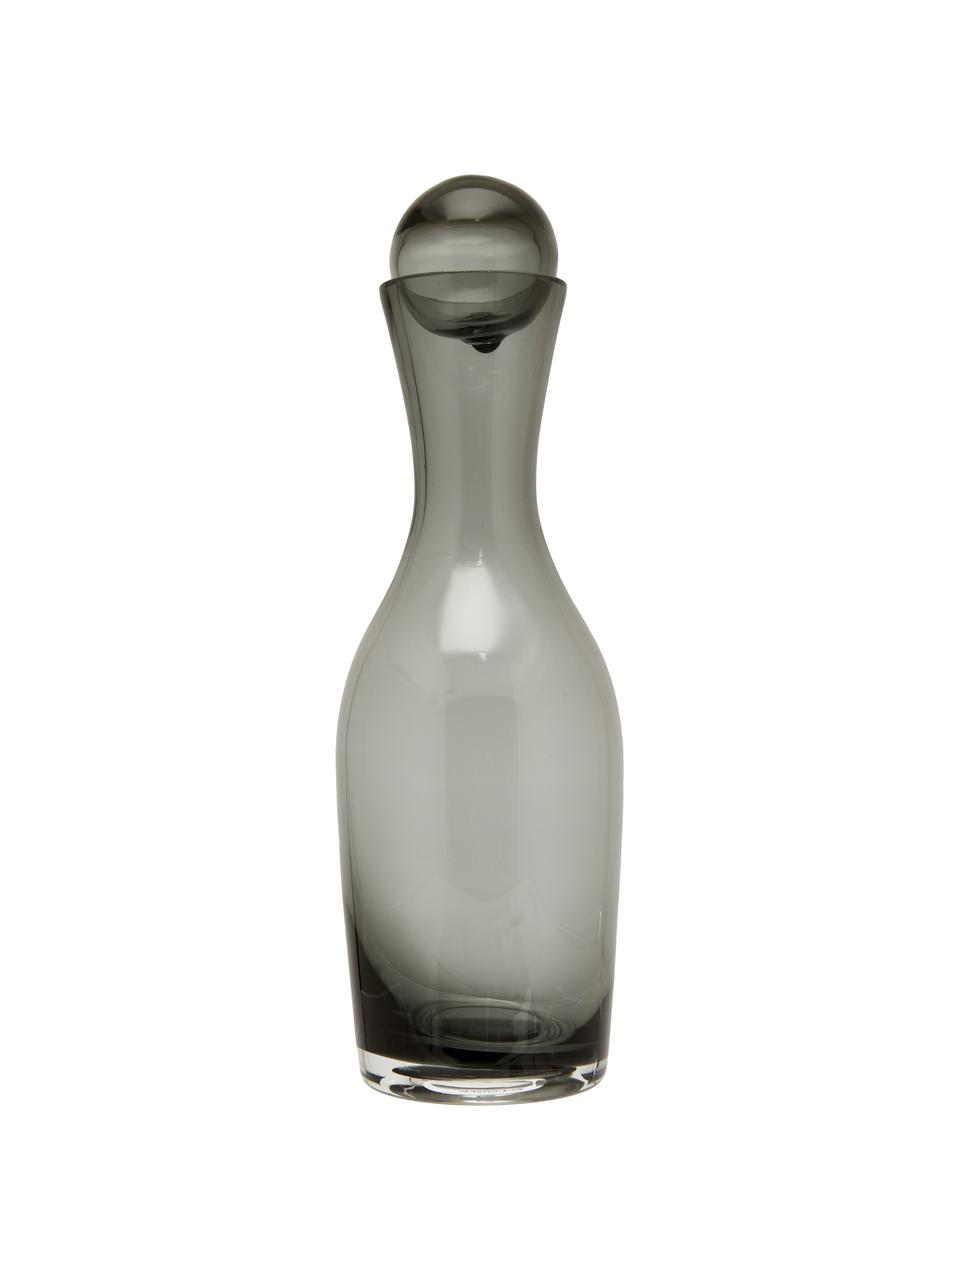 Glazen karaf Houston in grijs met kogelsluiting, 1 L, Glas, Transparant, H 30 cm